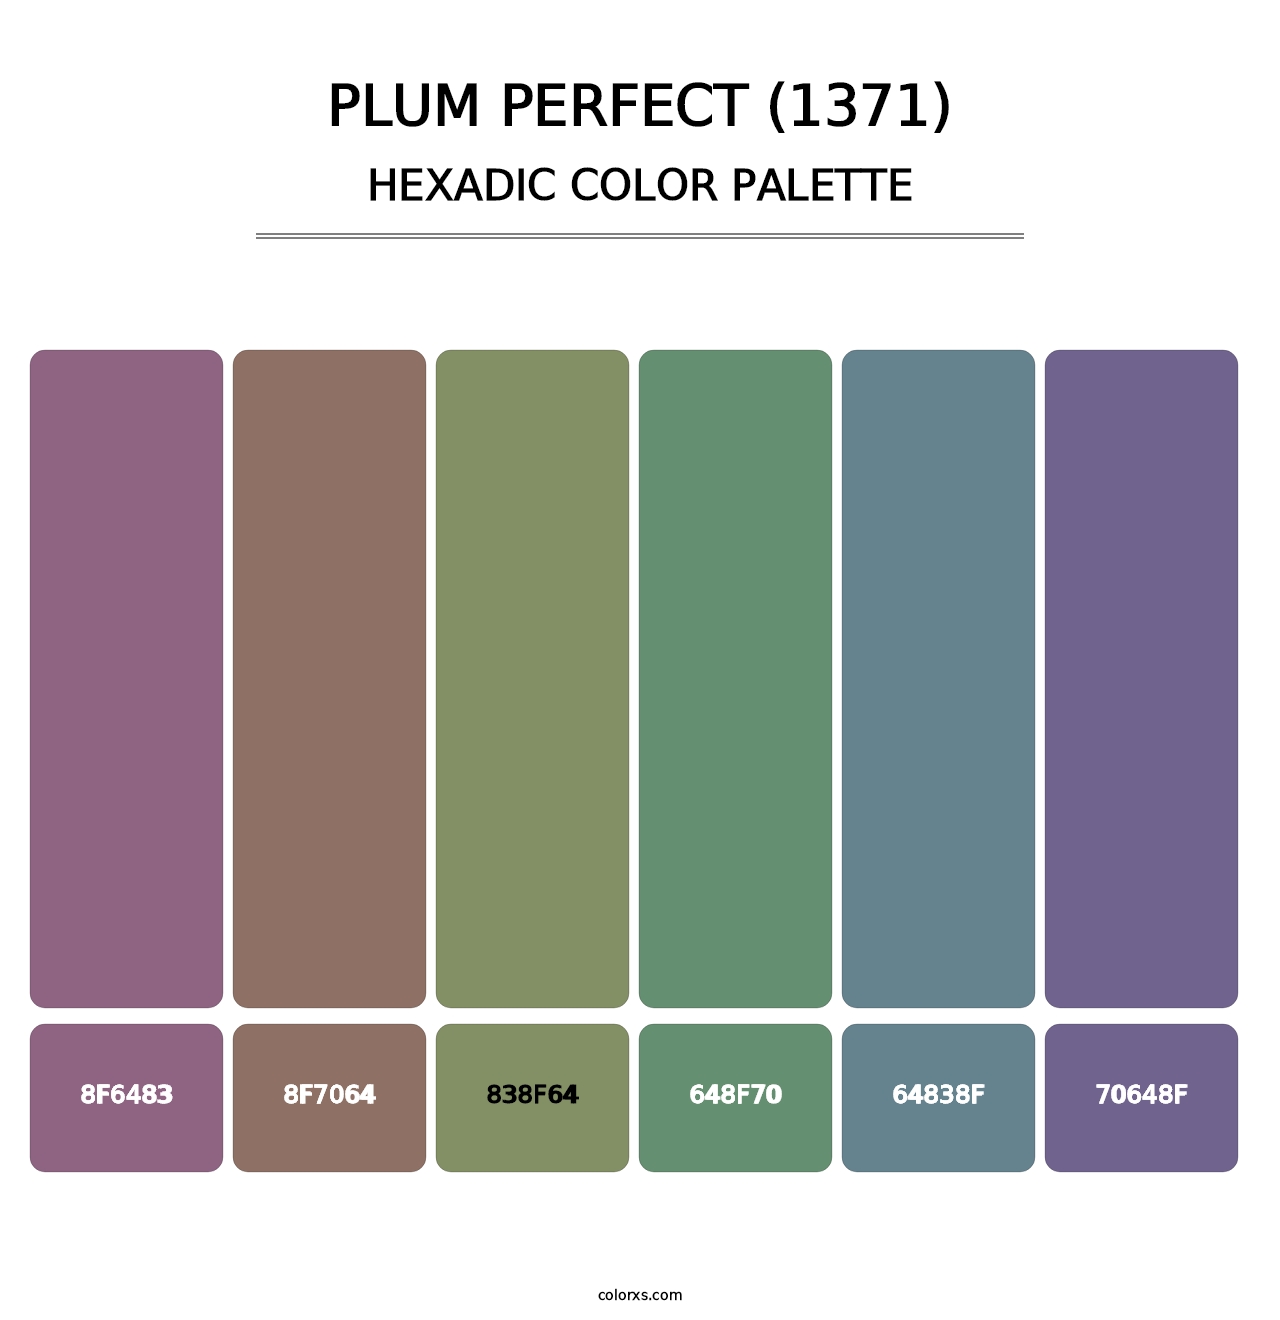 Plum Perfect (1371) - Hexadic Color Palette